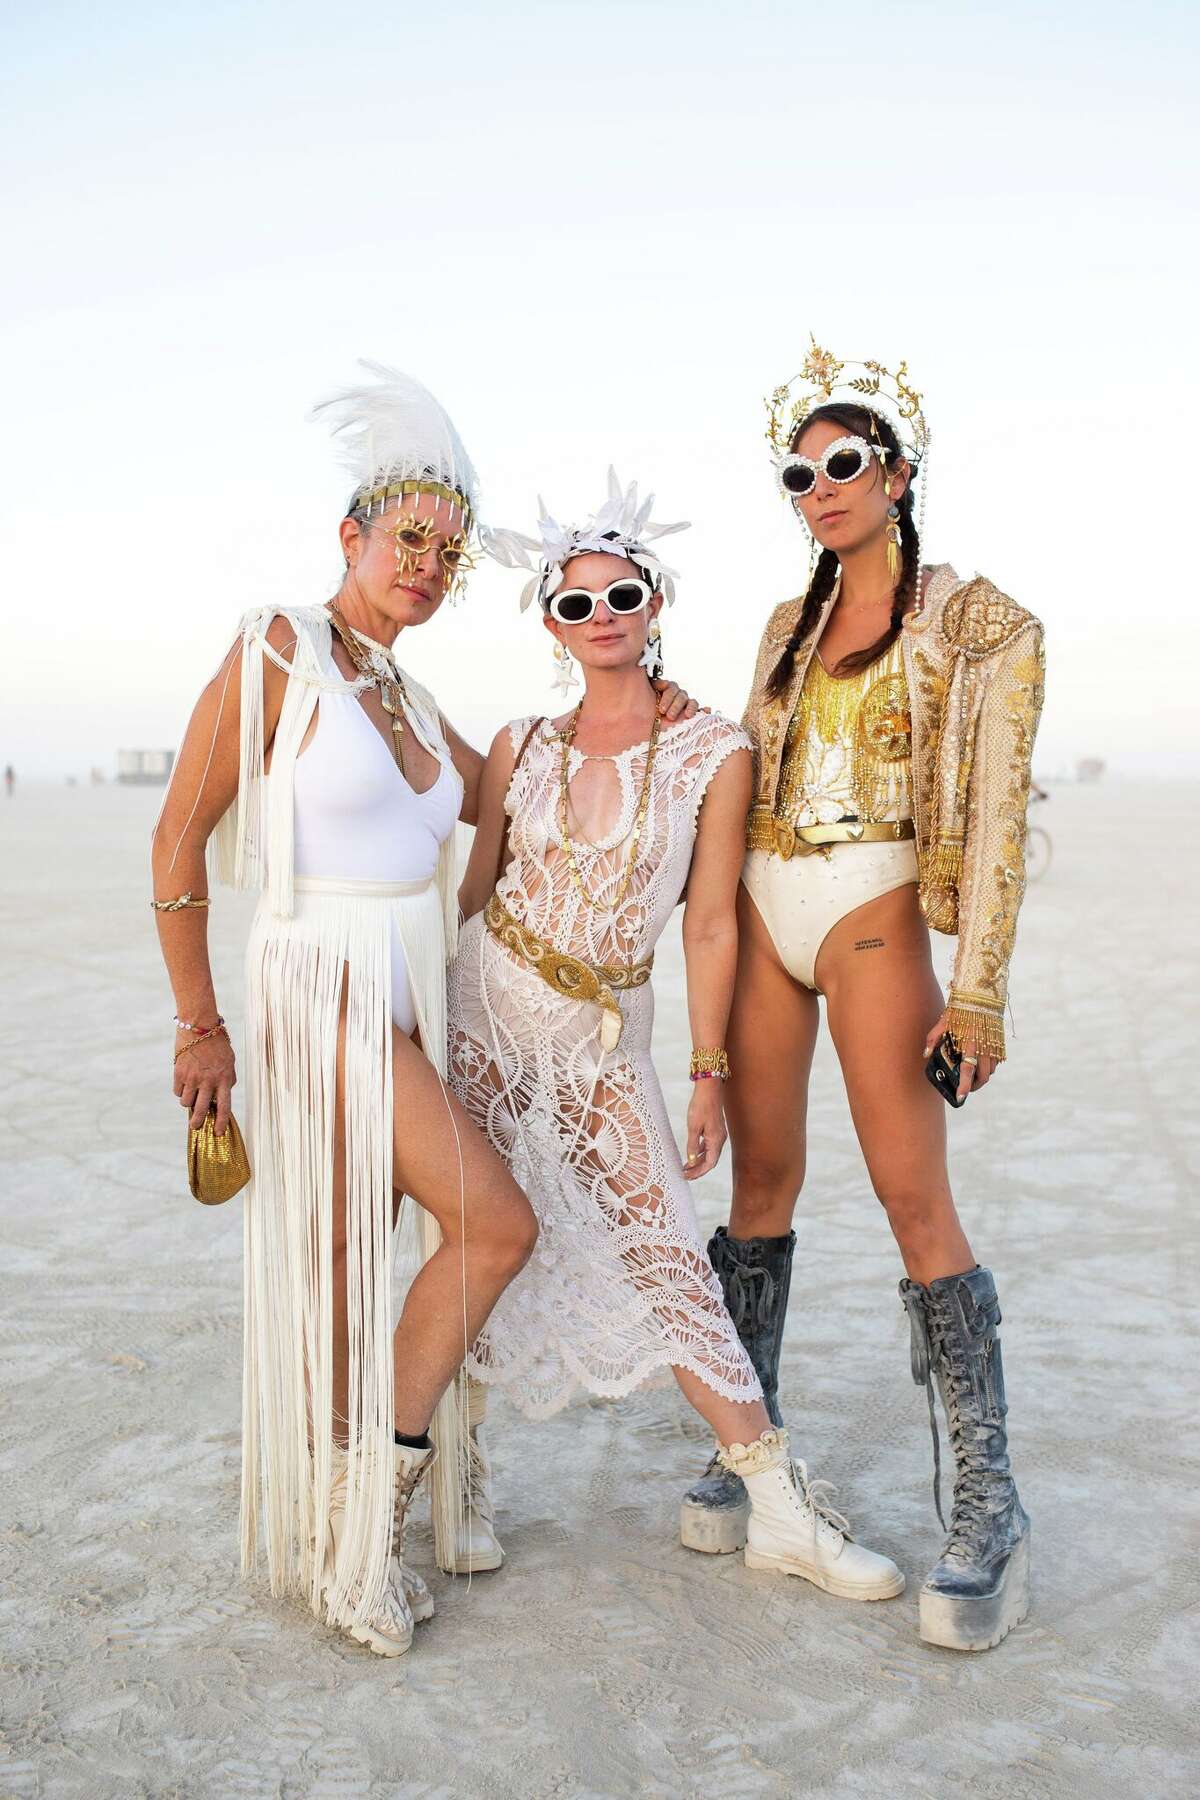 @bethielle, @3casascareyes and @ravenkauffman at Burning Man 2022 in the Black Rock Desert of Gerlach, Nevada.